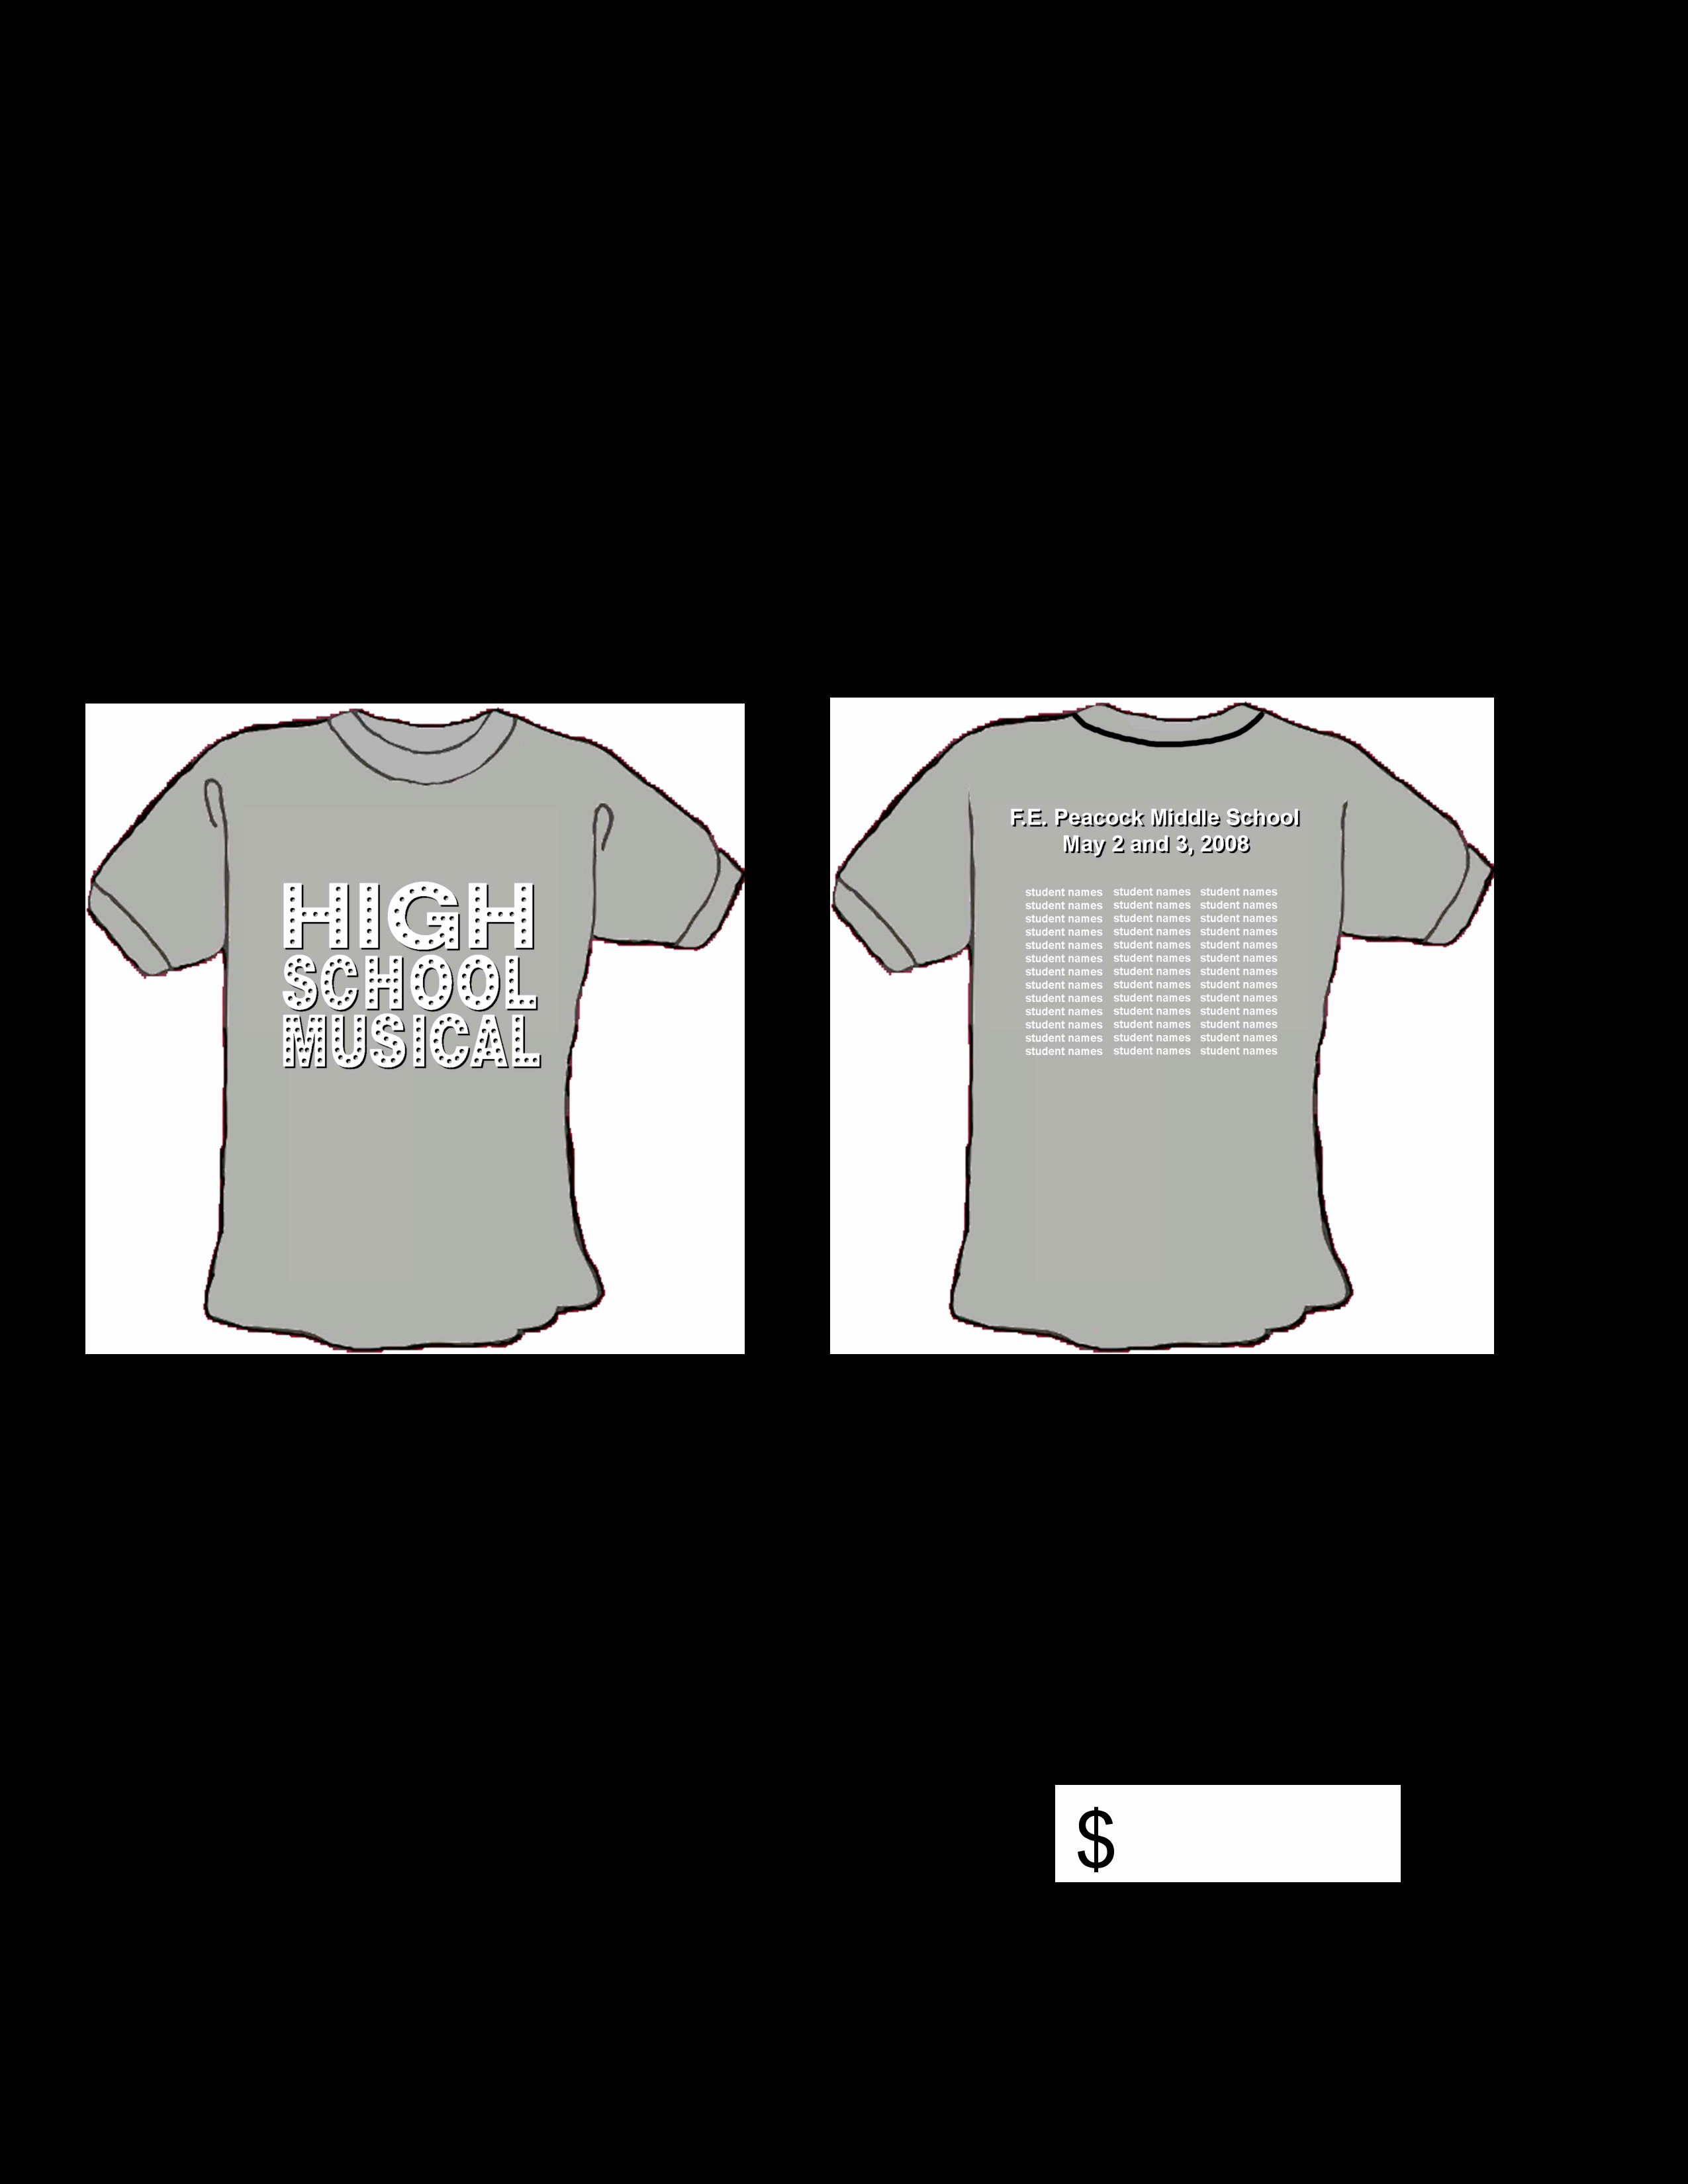 Shirt order form Template Unique Free High School T Shirt order form